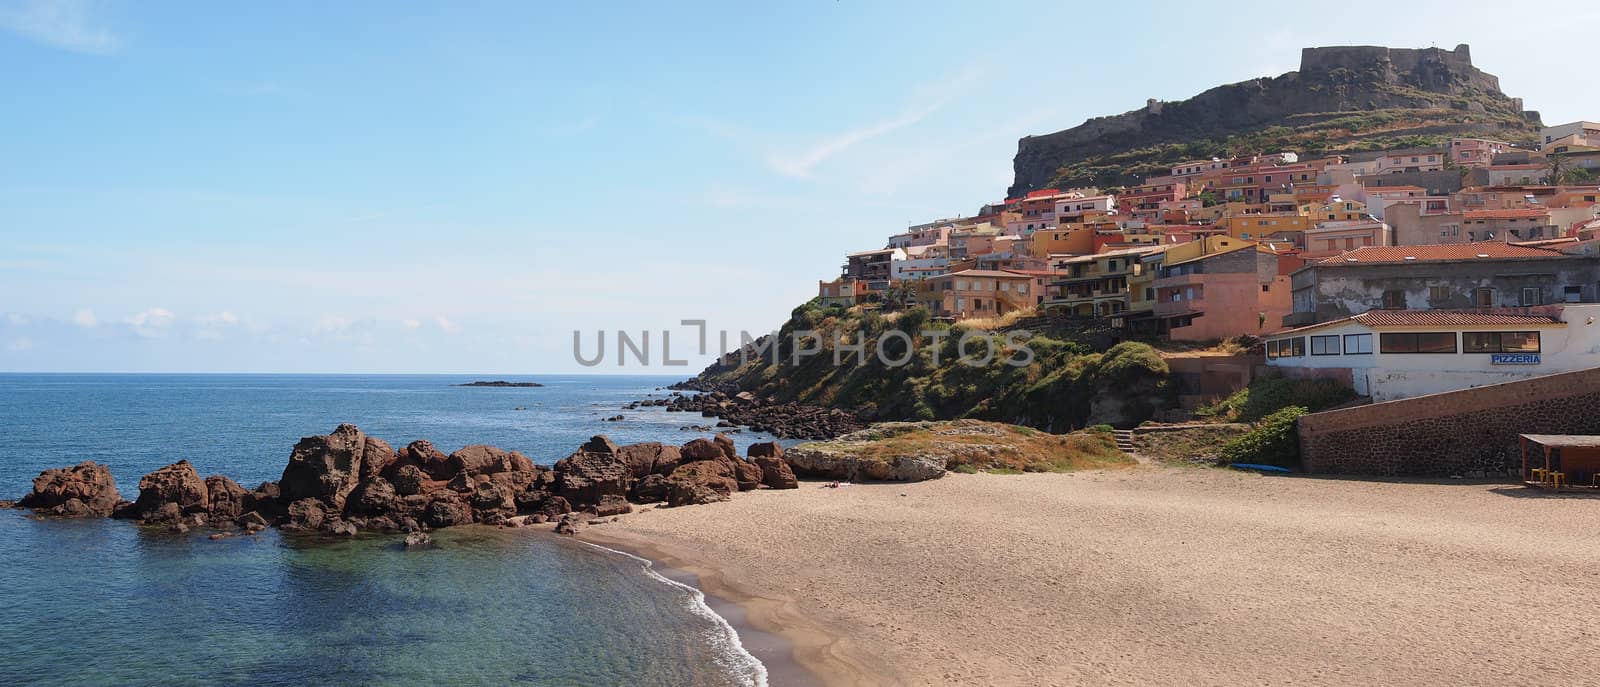 Panorama of the sardinian town Castelsardo, built upon a cliff on the north coast of Sardinia, Italy.